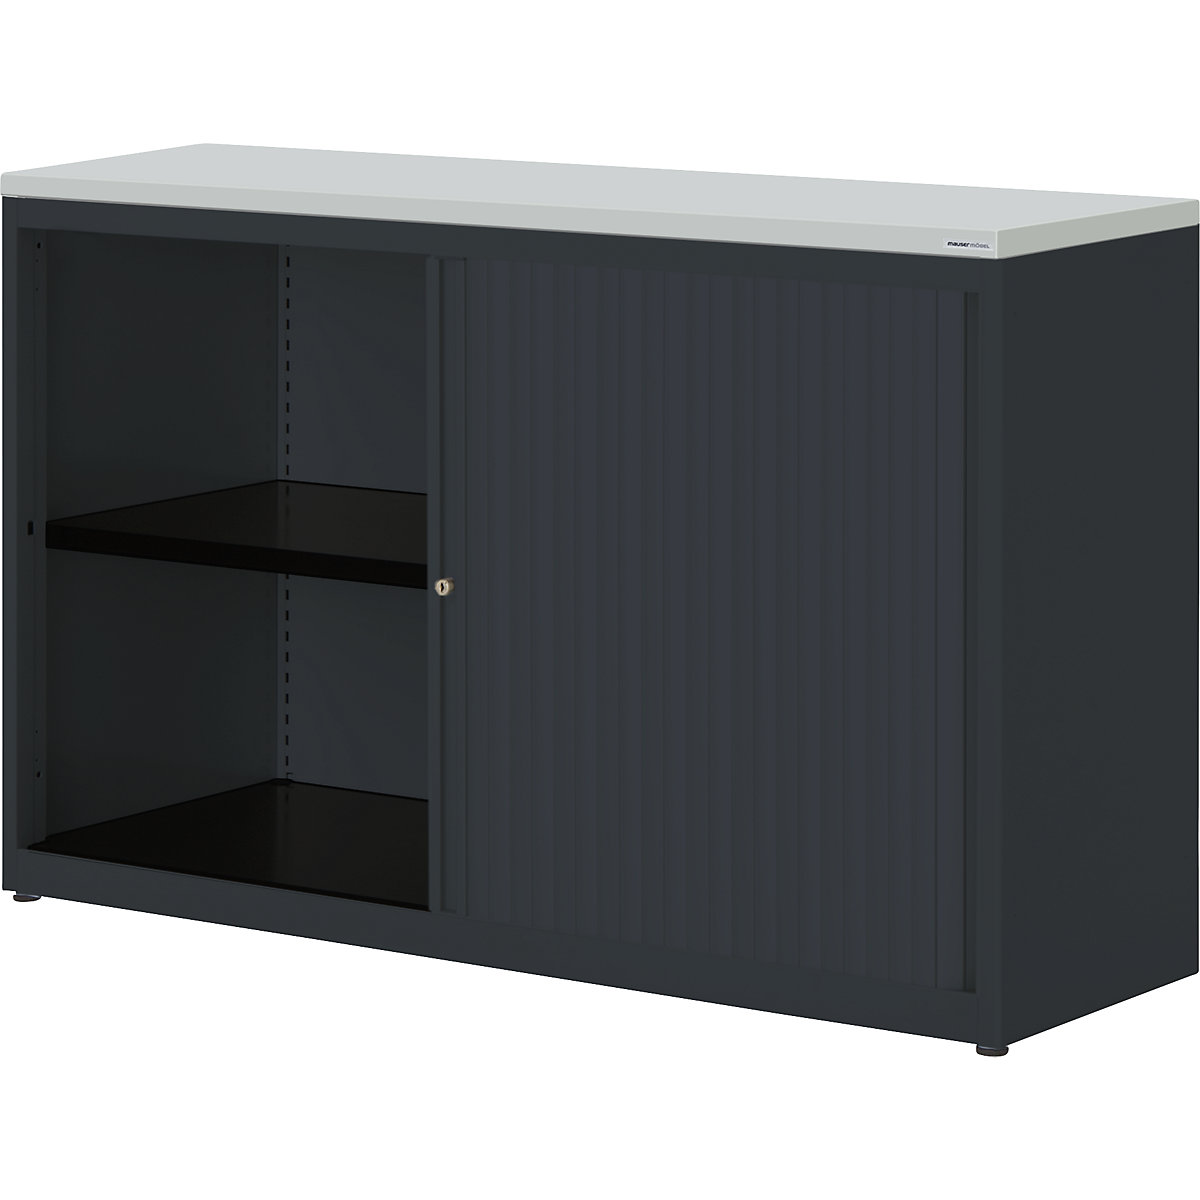 Horizontal roller shutter cupboard – mauser, HxWxD 830 x 1200 x 432 mm, plastic panel, 1 shelf, charcoal / charcoal / light grey-3